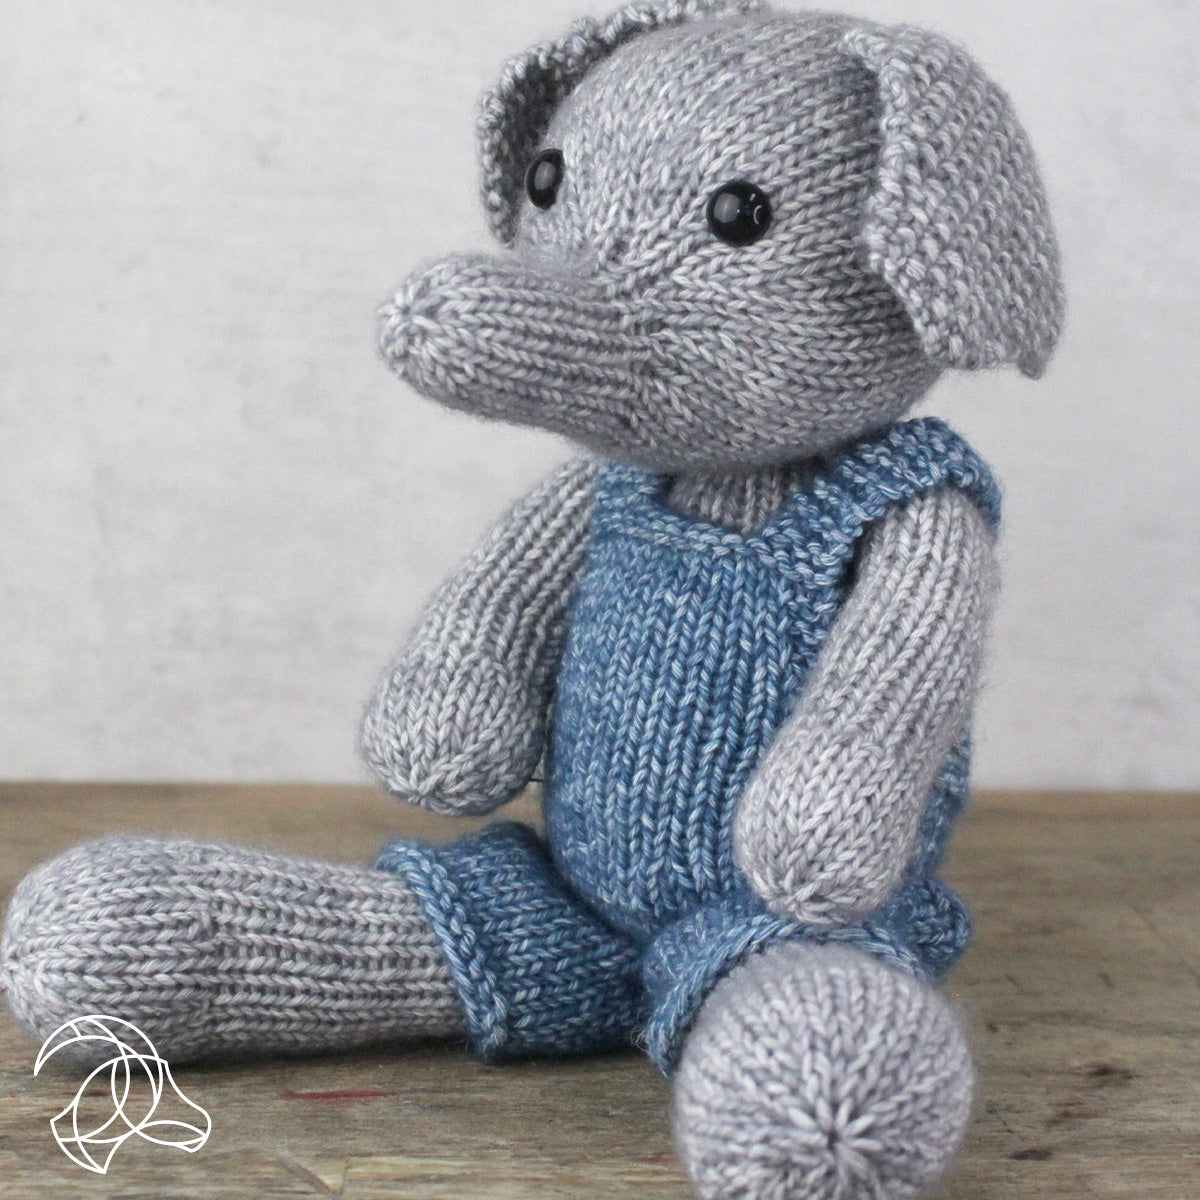 Frankie the Baby Elephant - Adorable Knitting Kit by Hardicraft